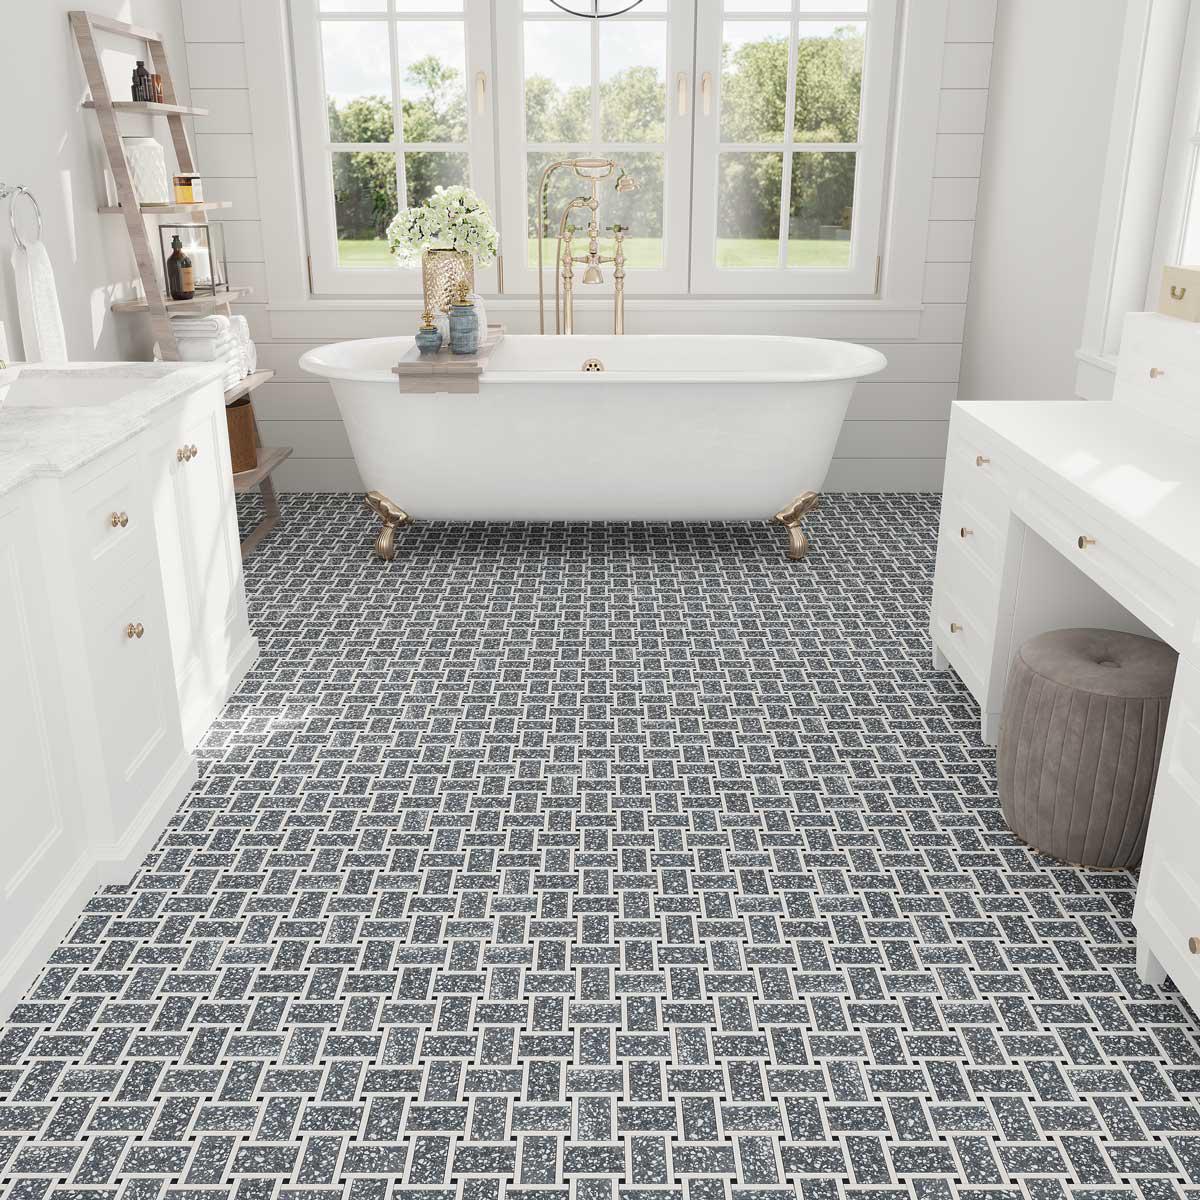 Classic basket weave bathroom floor tile with unique terrazzo speckles